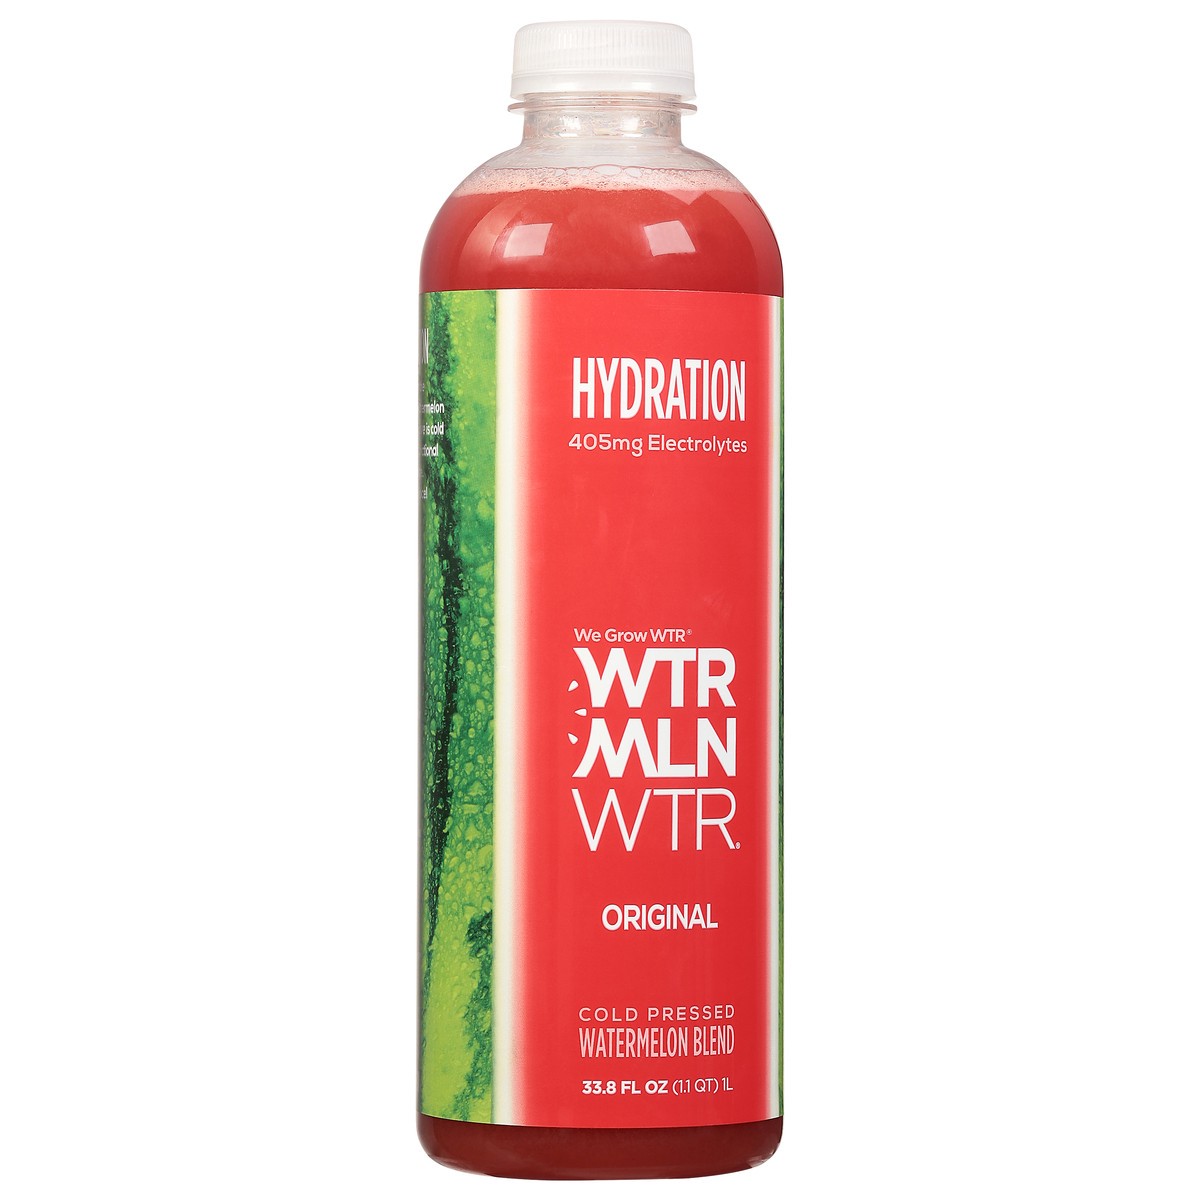 slide 2 of 9, WTRMLN WTR We Grow WTR Hydration Original Watermelon Blend 33.8 fl oz, 1 liter